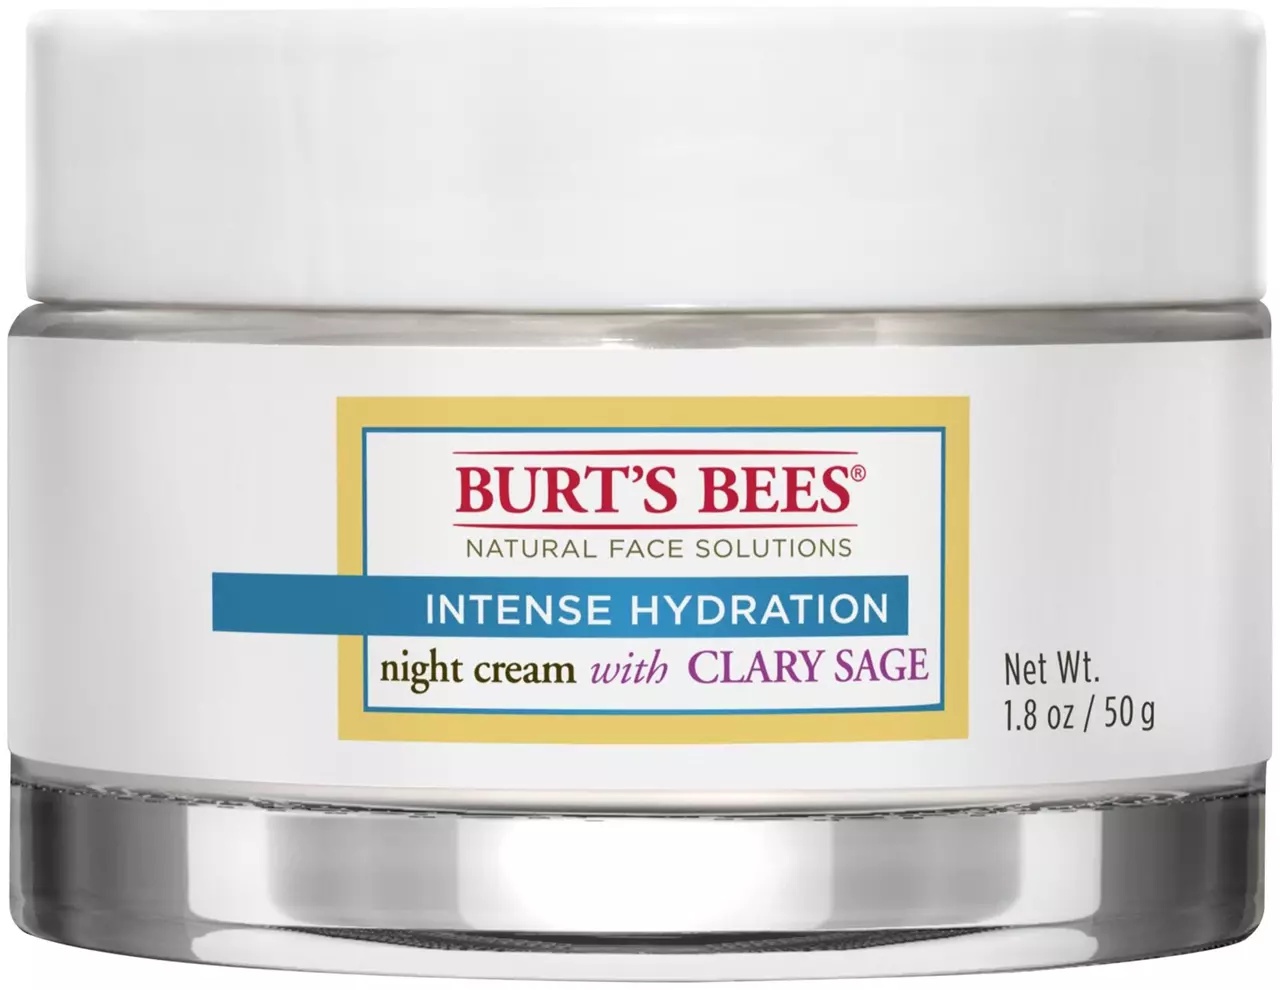 Burt's Bees Intense Hydration Night Cream